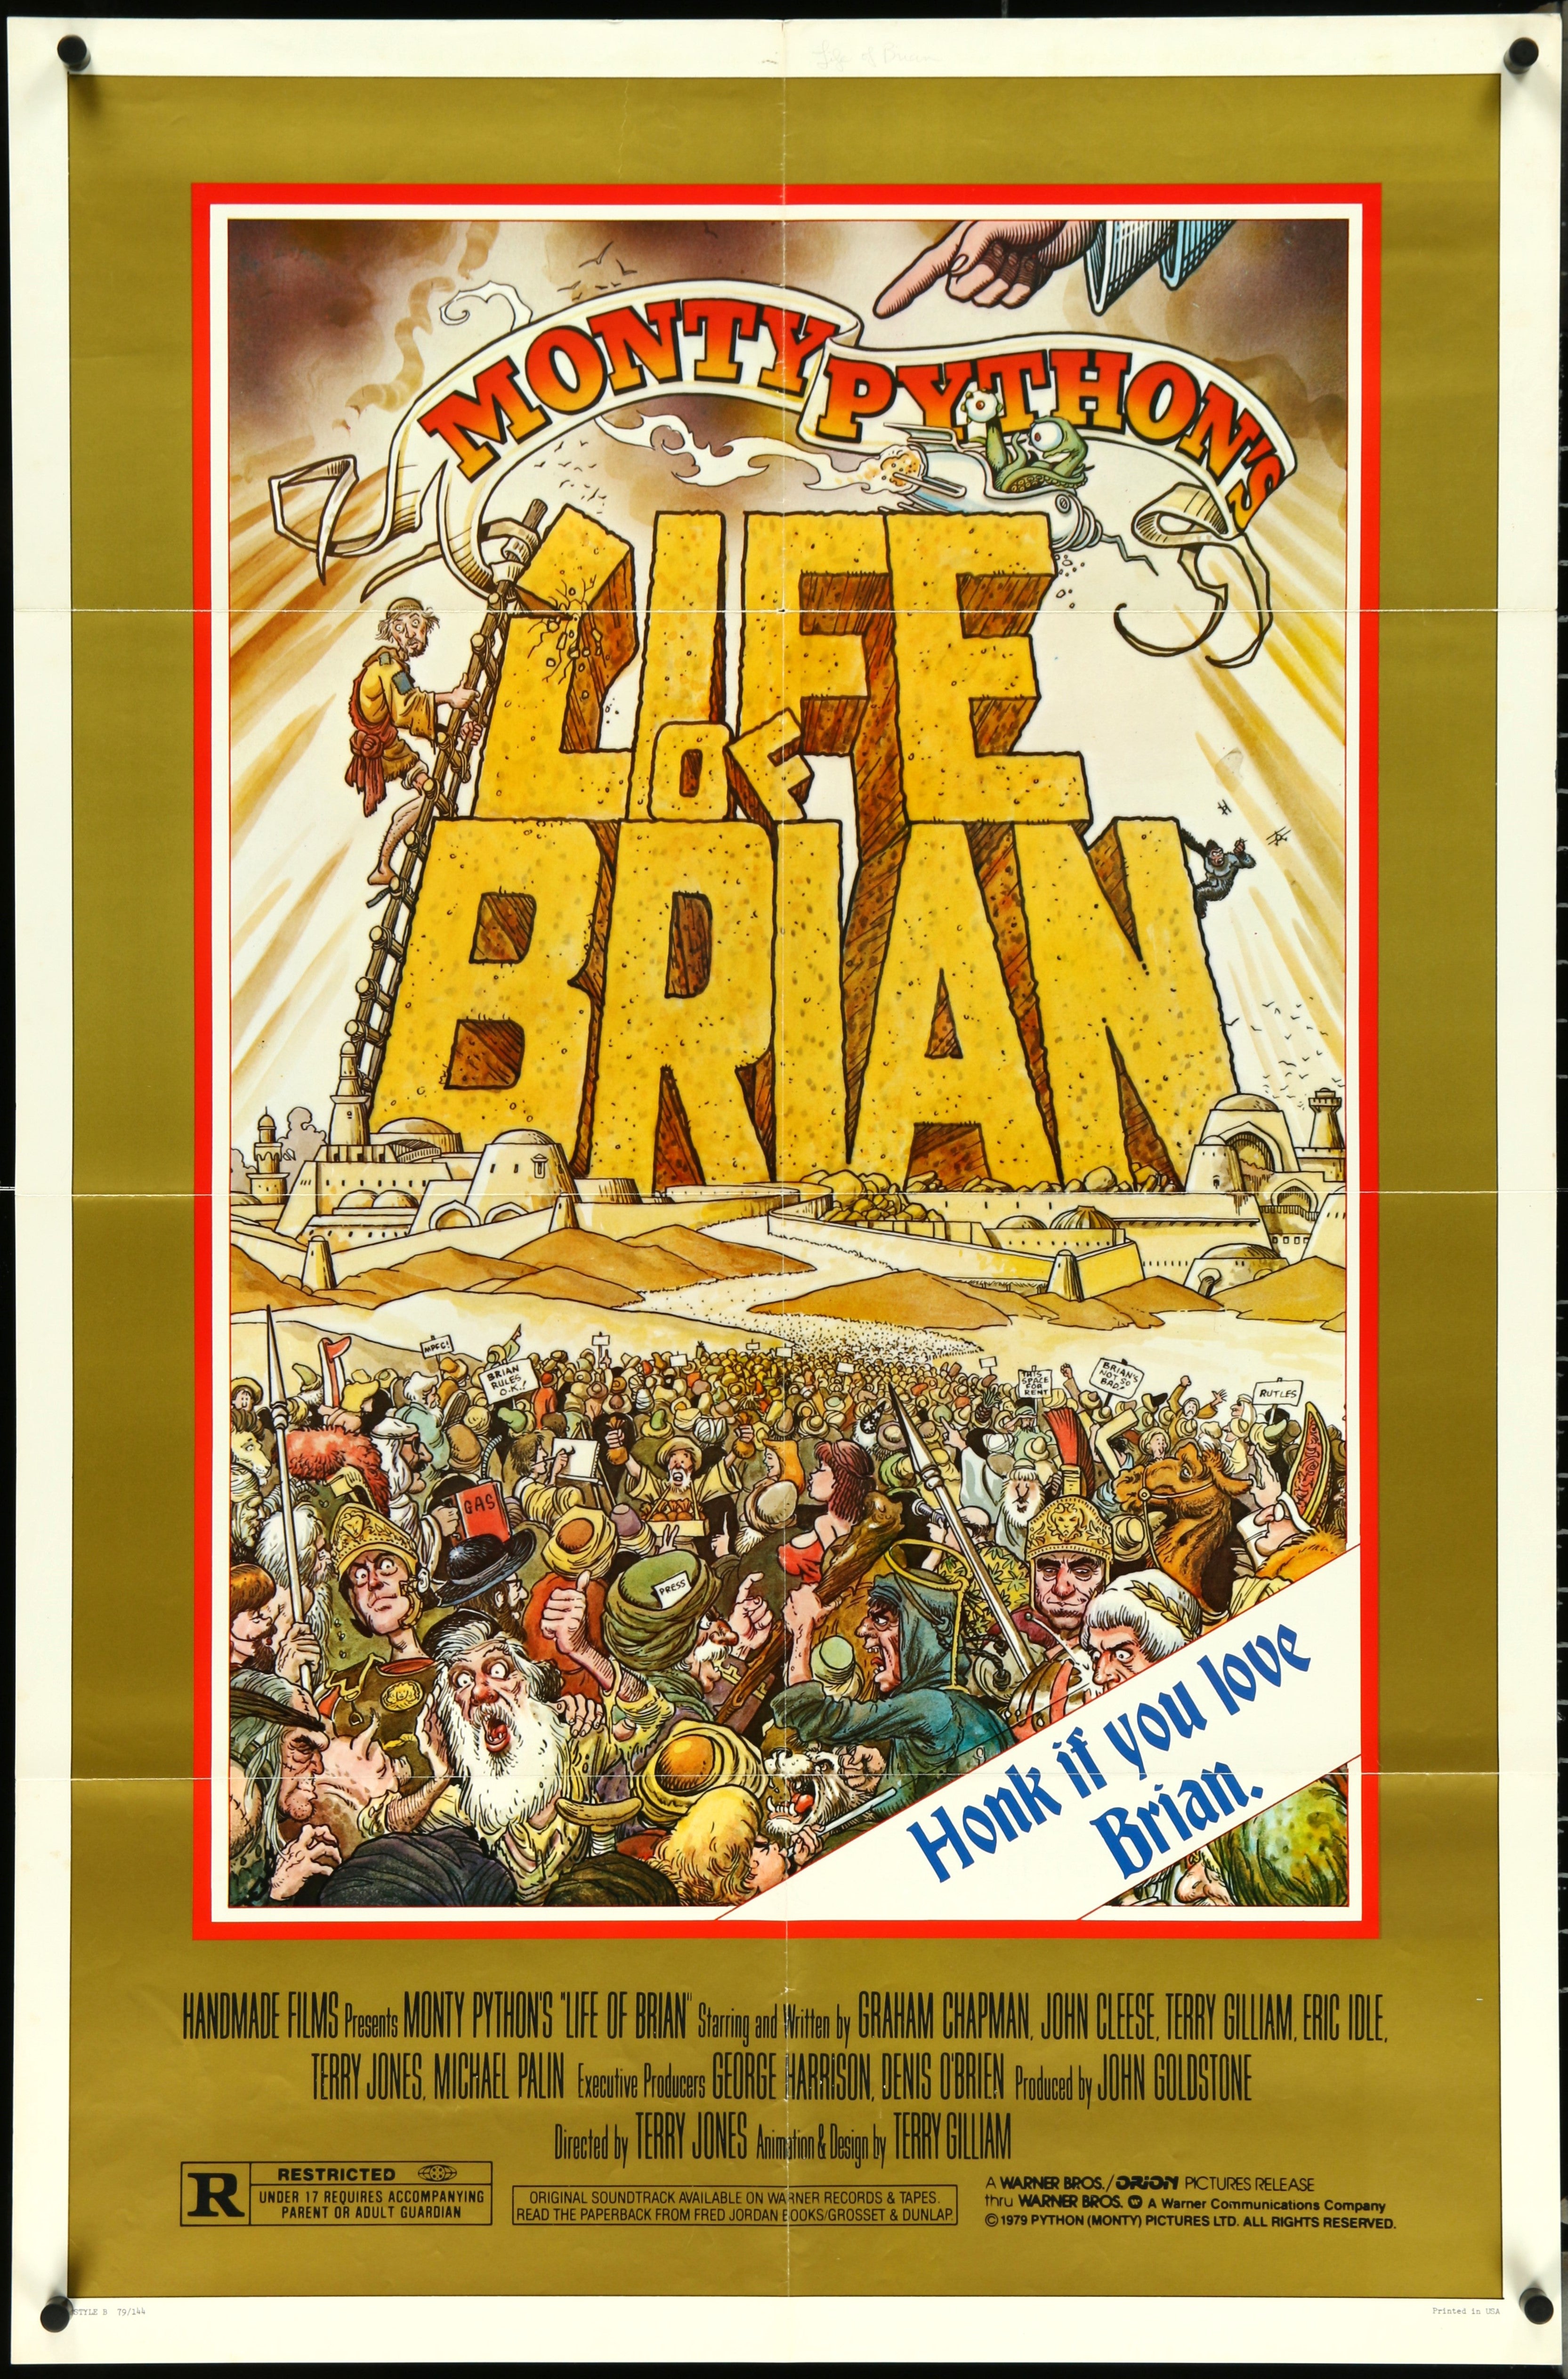 MONTY PYTHONS: LIFE OF BRIAN (1979)